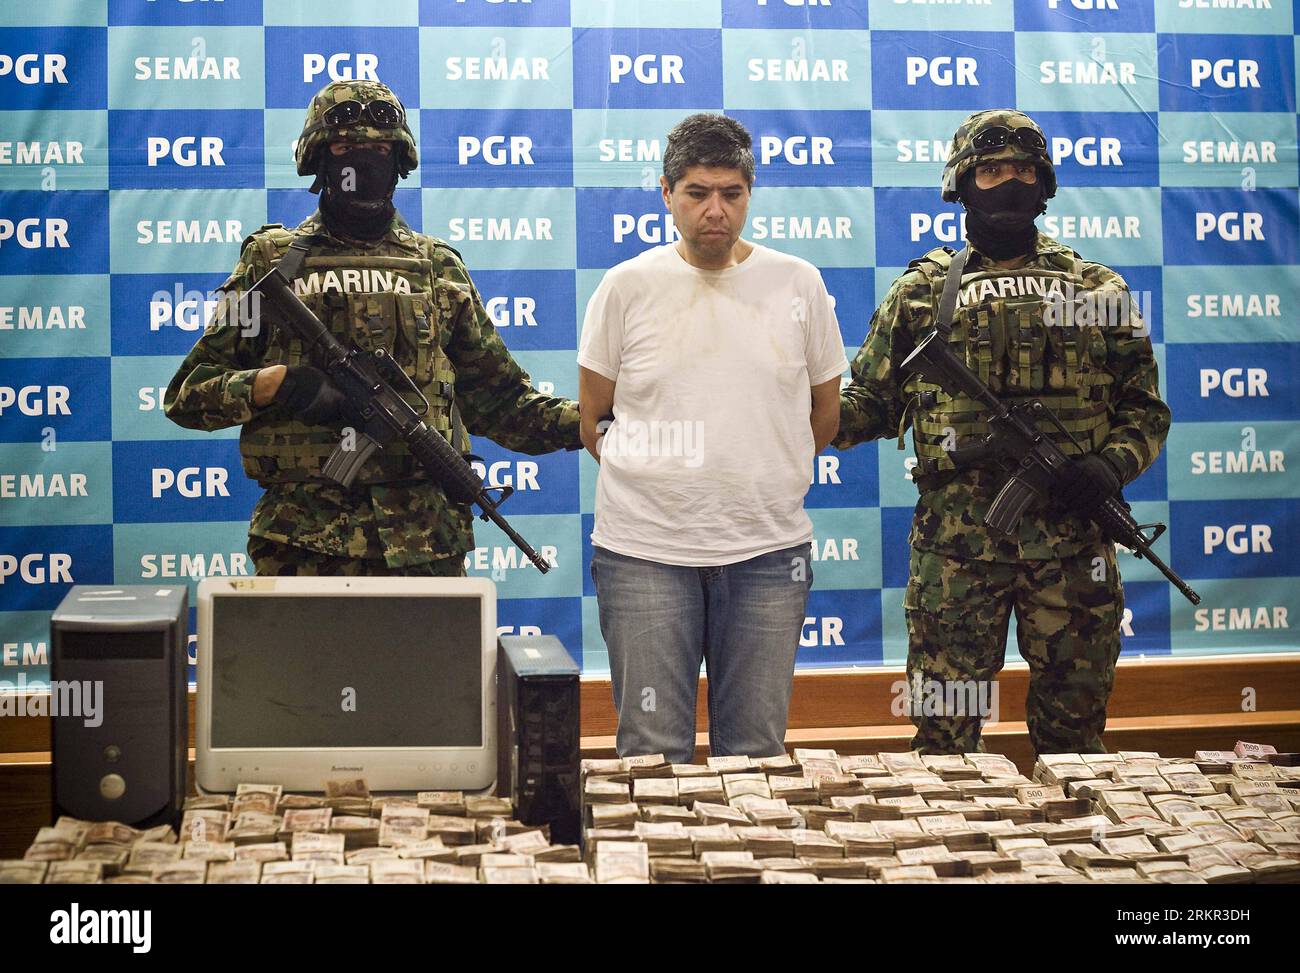 Bildnummer: 58111850  Datum: 15.06.2012  Copyright: imago/Xinhua (120616) -- MEXICO CITY, June 16, 2012 (Xinhua) -- Eric Jovan Lozano Diaz (C), known as El Chuco , is presented to the media in Mexico City, capital of Mexico, on June 15, 2012. Lozano, who is allegedly the money manager for drug cartel Los Zetas , was arrested in the border city of Nuevo Laredo, north Mexico. (Xinhua/Rodrigo Oropeza) (ctt) MEXICO-MEXICO CITY-DRUG TRAFFICKING PUBLICATIONxNOTxINxCHN People Politik Drogen Drogenmafia Drogenkartell xmk x0x 2012 quer premiumd      58111850 Date 15 06 2012 Copyright Imago XINHUA  Mexi Stock Photo